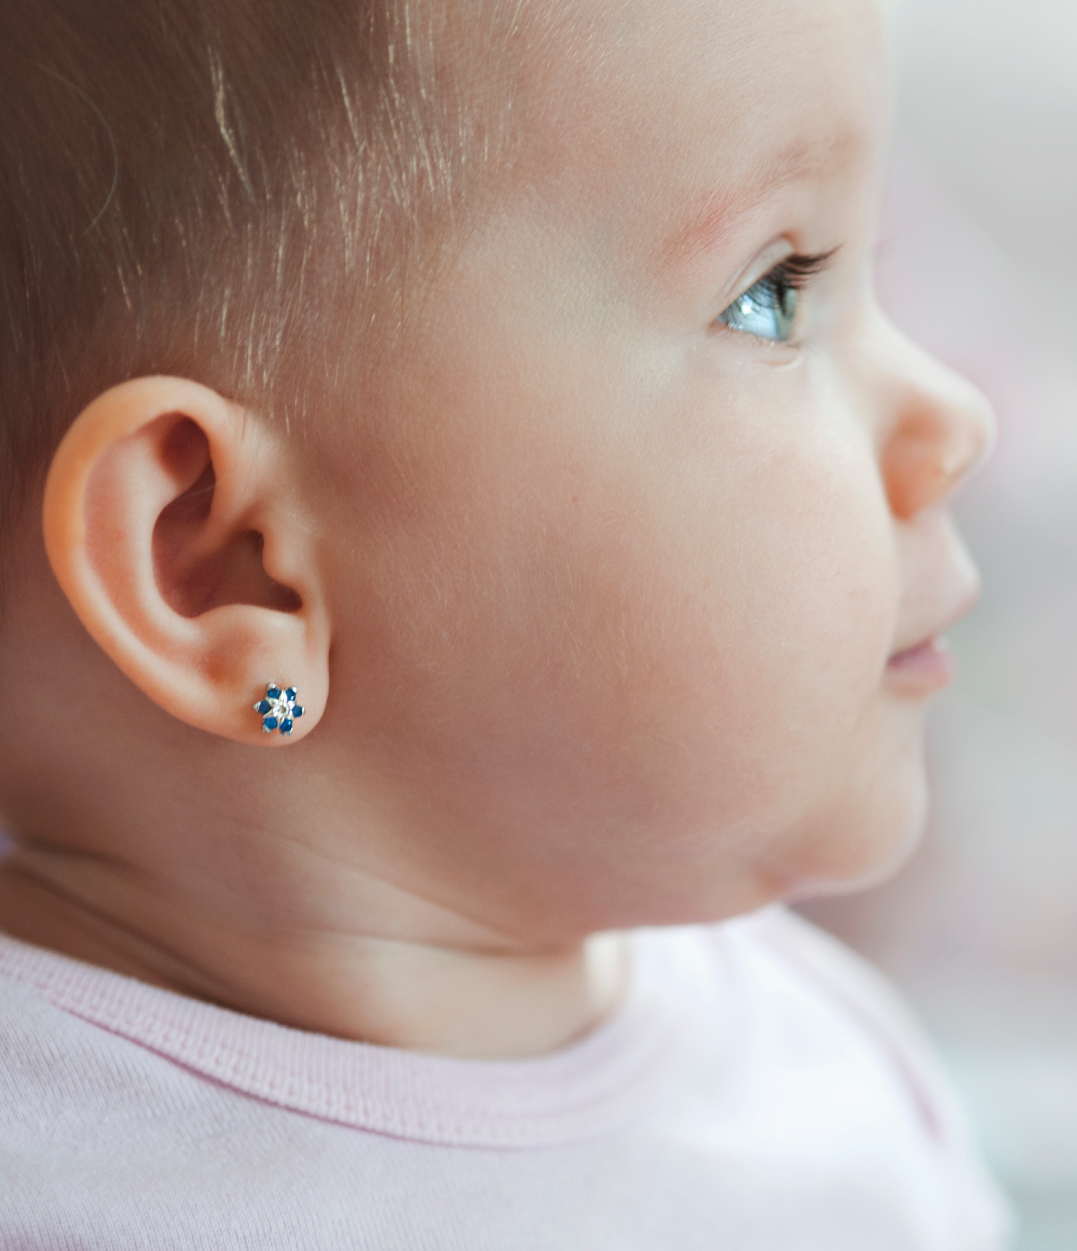 Pediatric Ear Piercing in Philadelphia